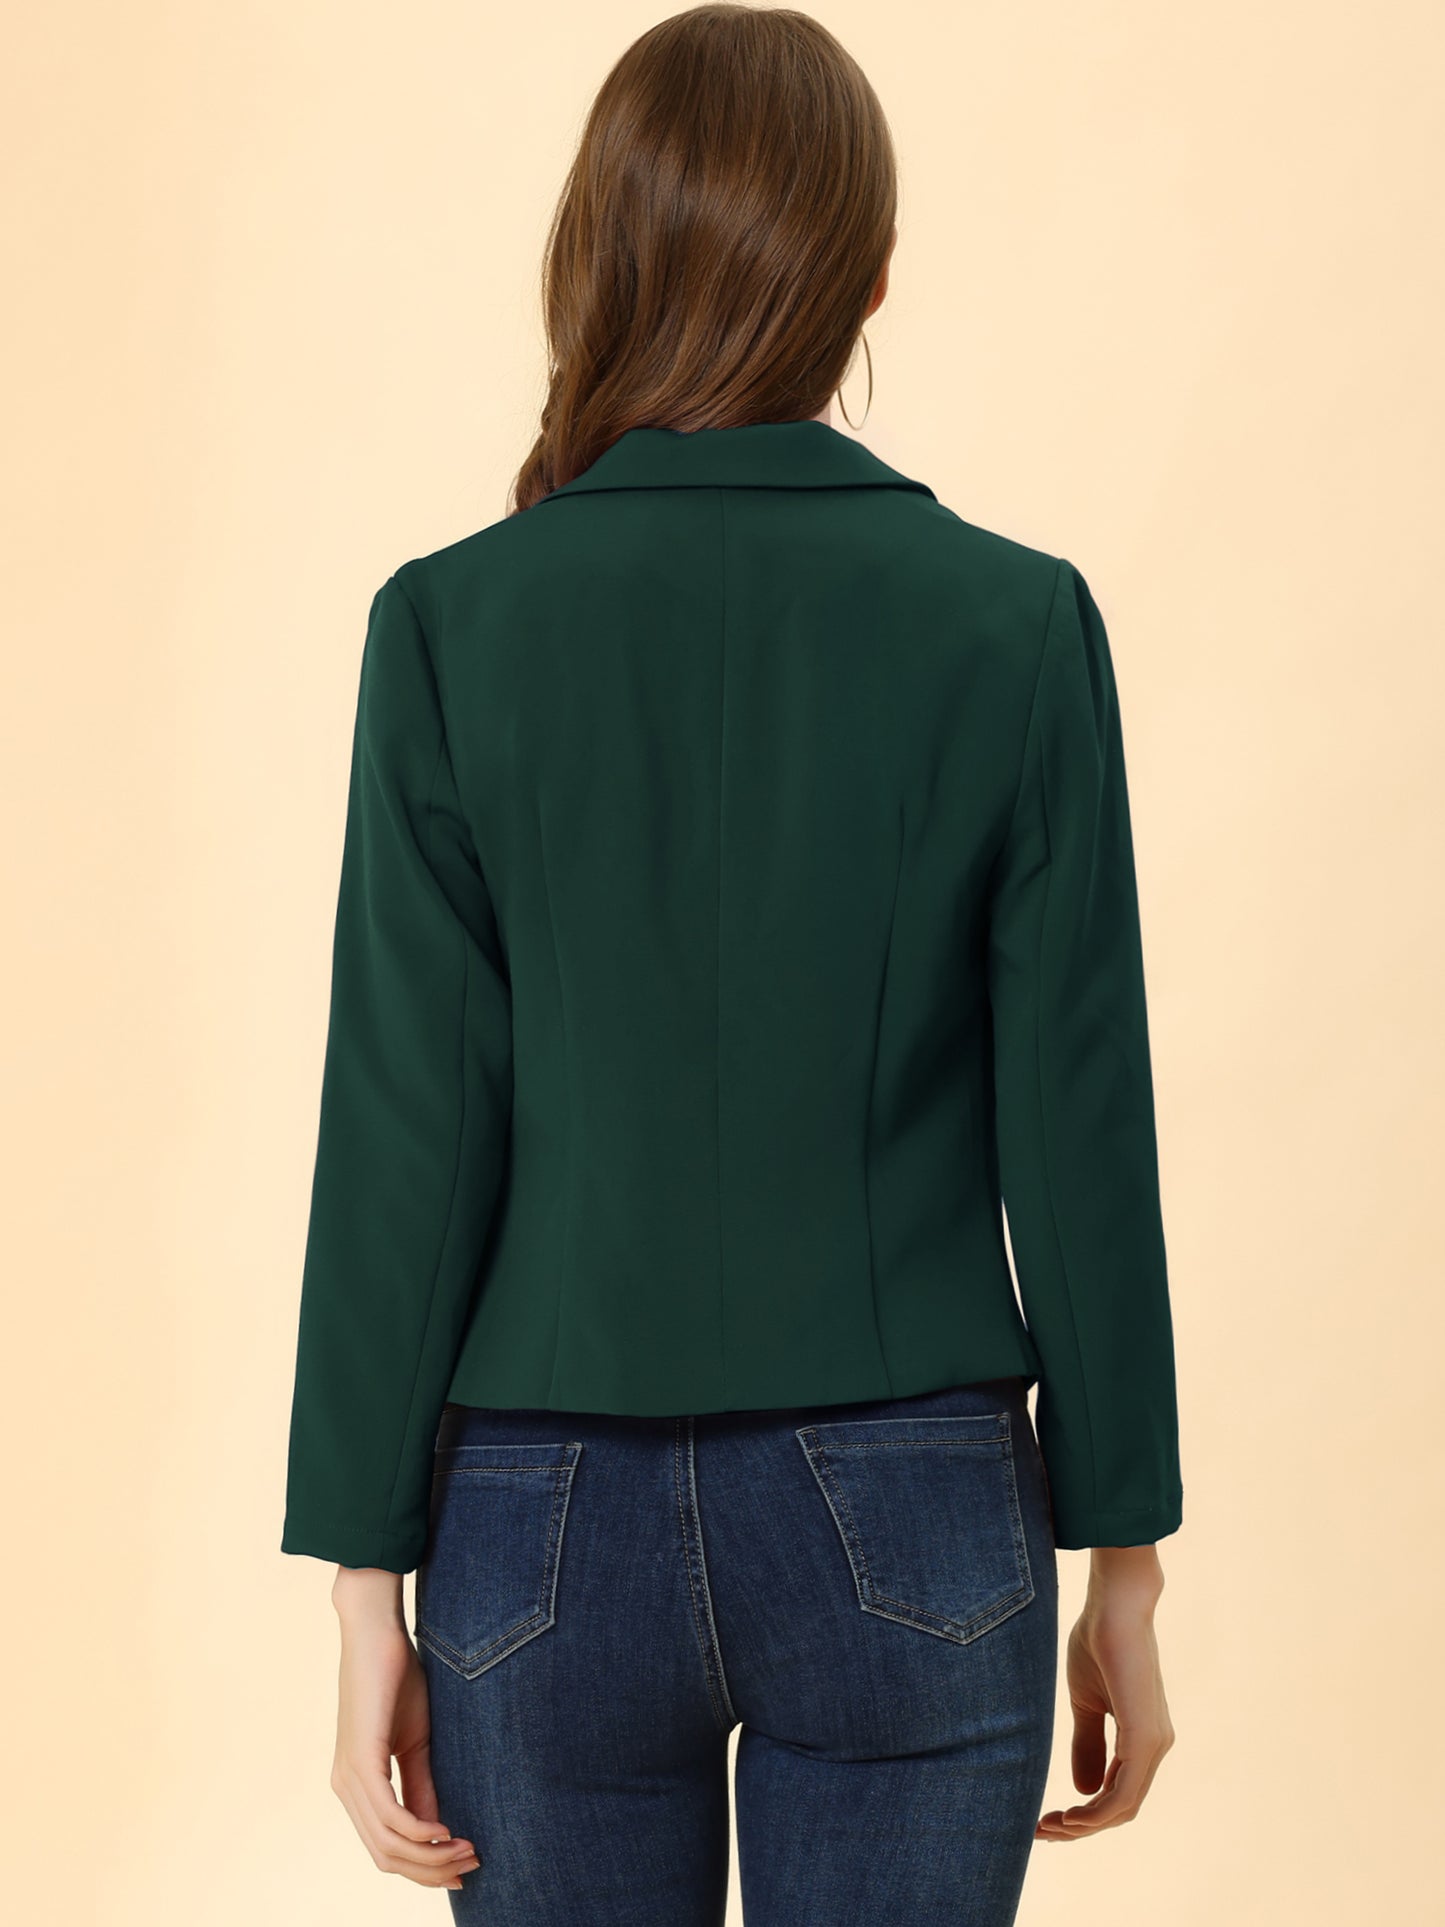 Allegra K Open Front Business Casual Workwear Crop Suit Blazer Jacket Green-Solid